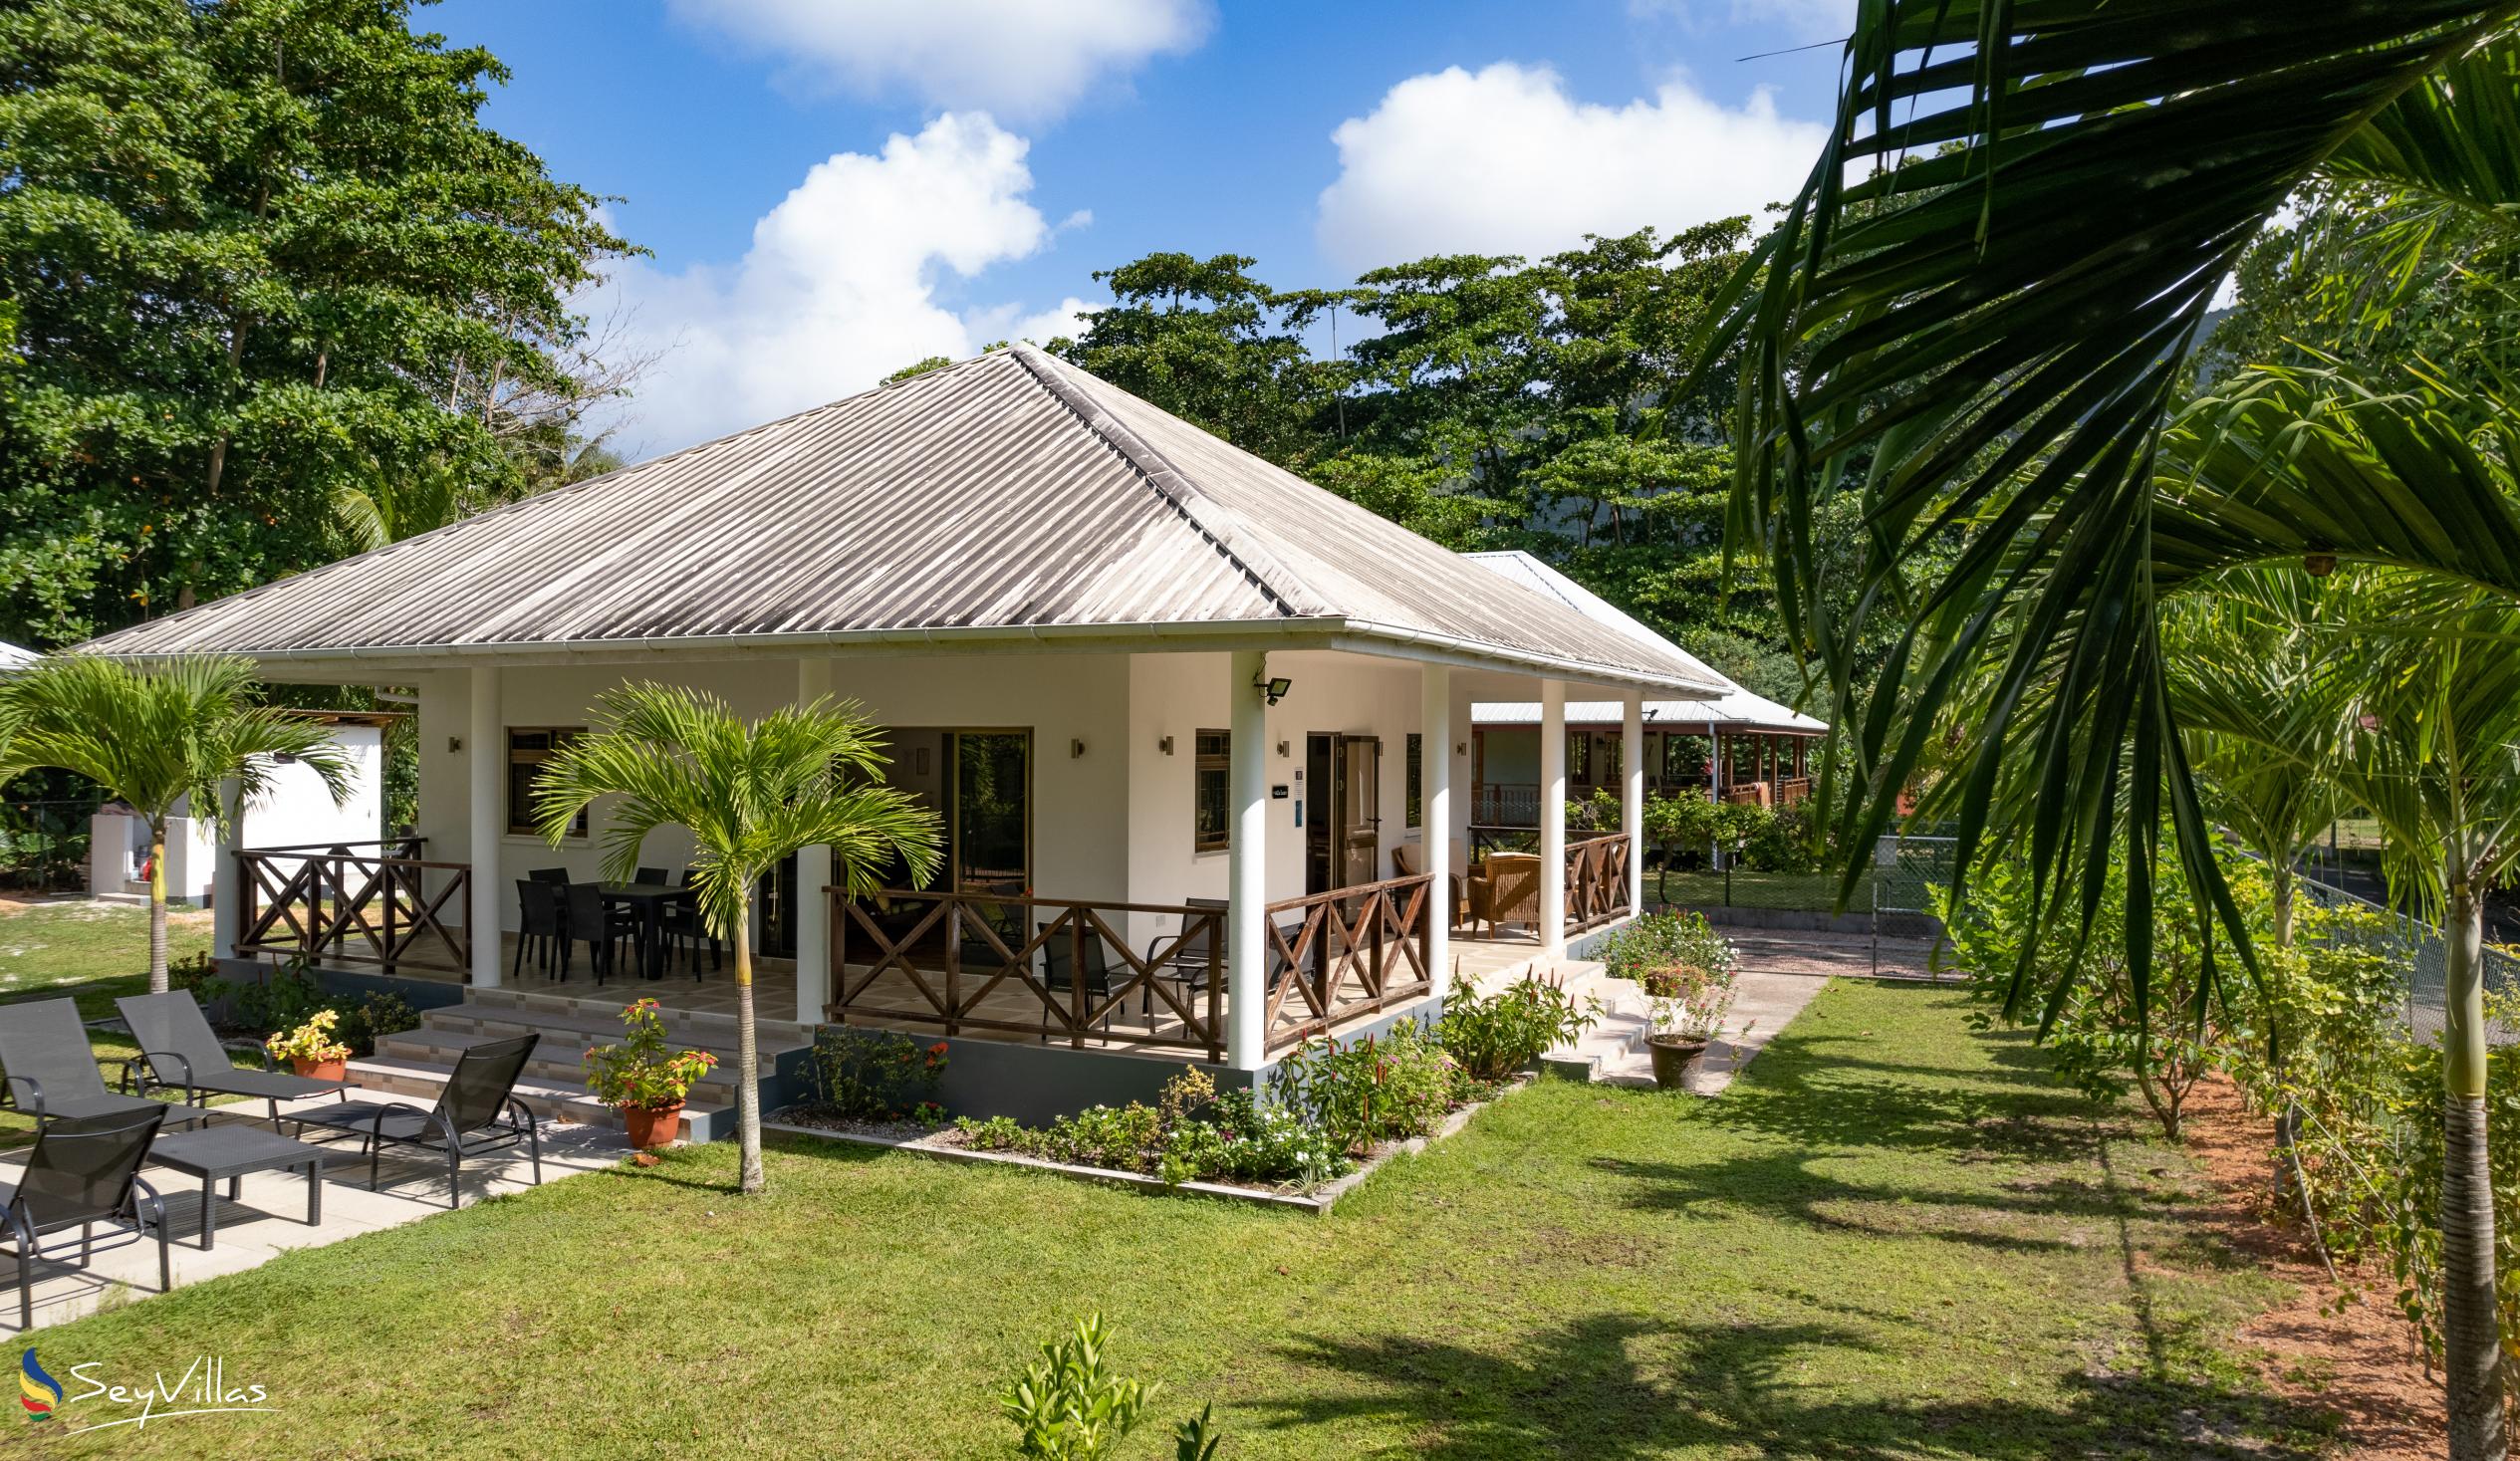 Foto 11: Villa Laure - Villa Laure - Praslin (Seychelles)